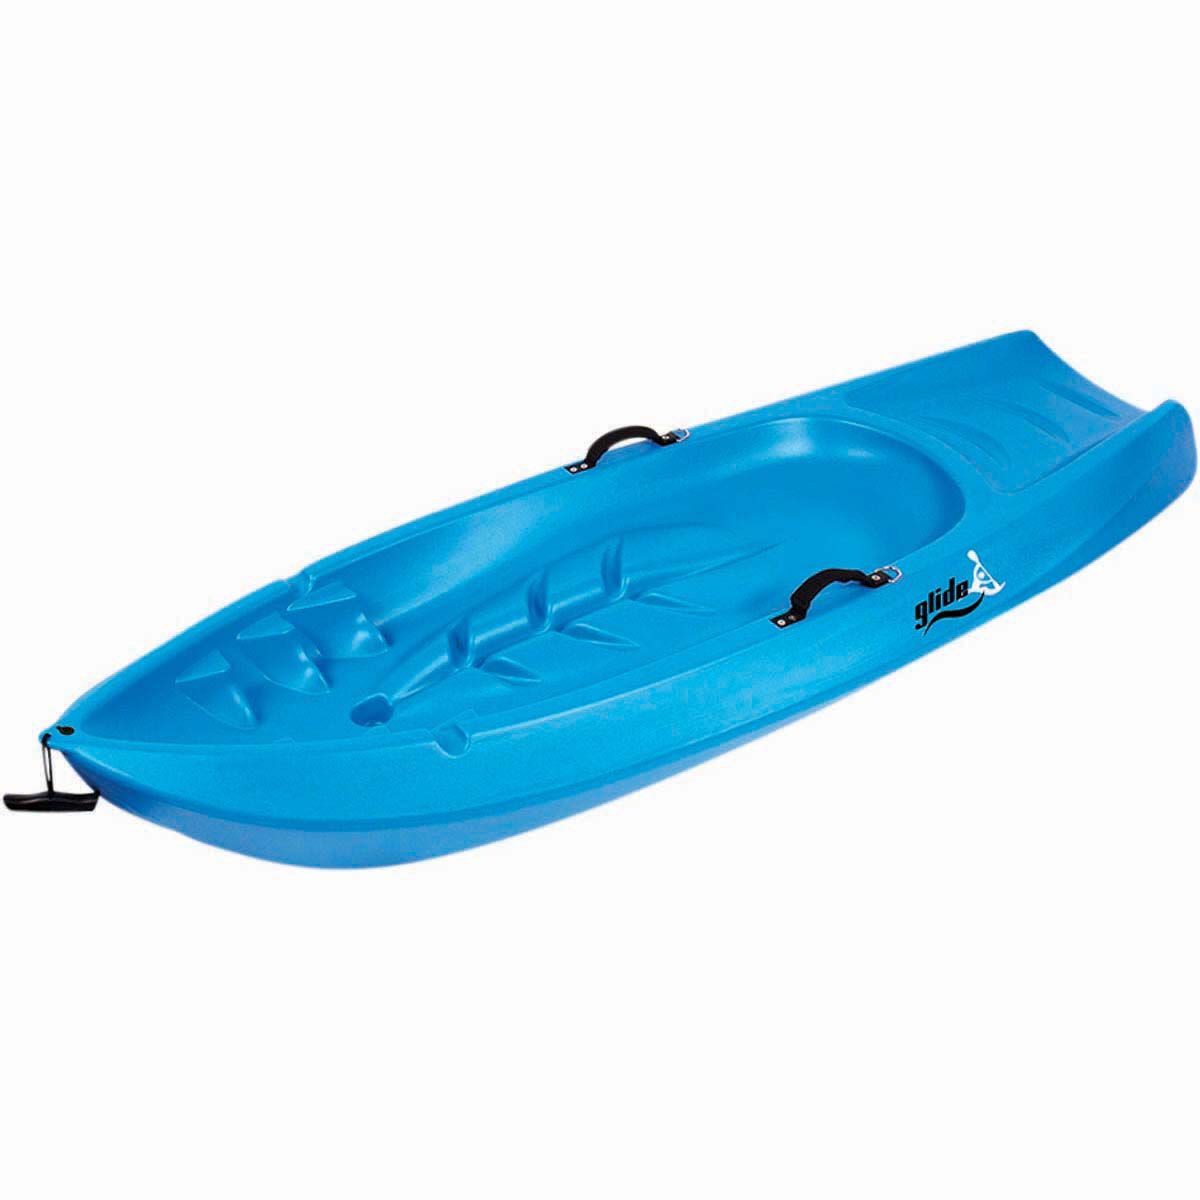 Glide Kid's Kayak Paddle and Seat Pad Set